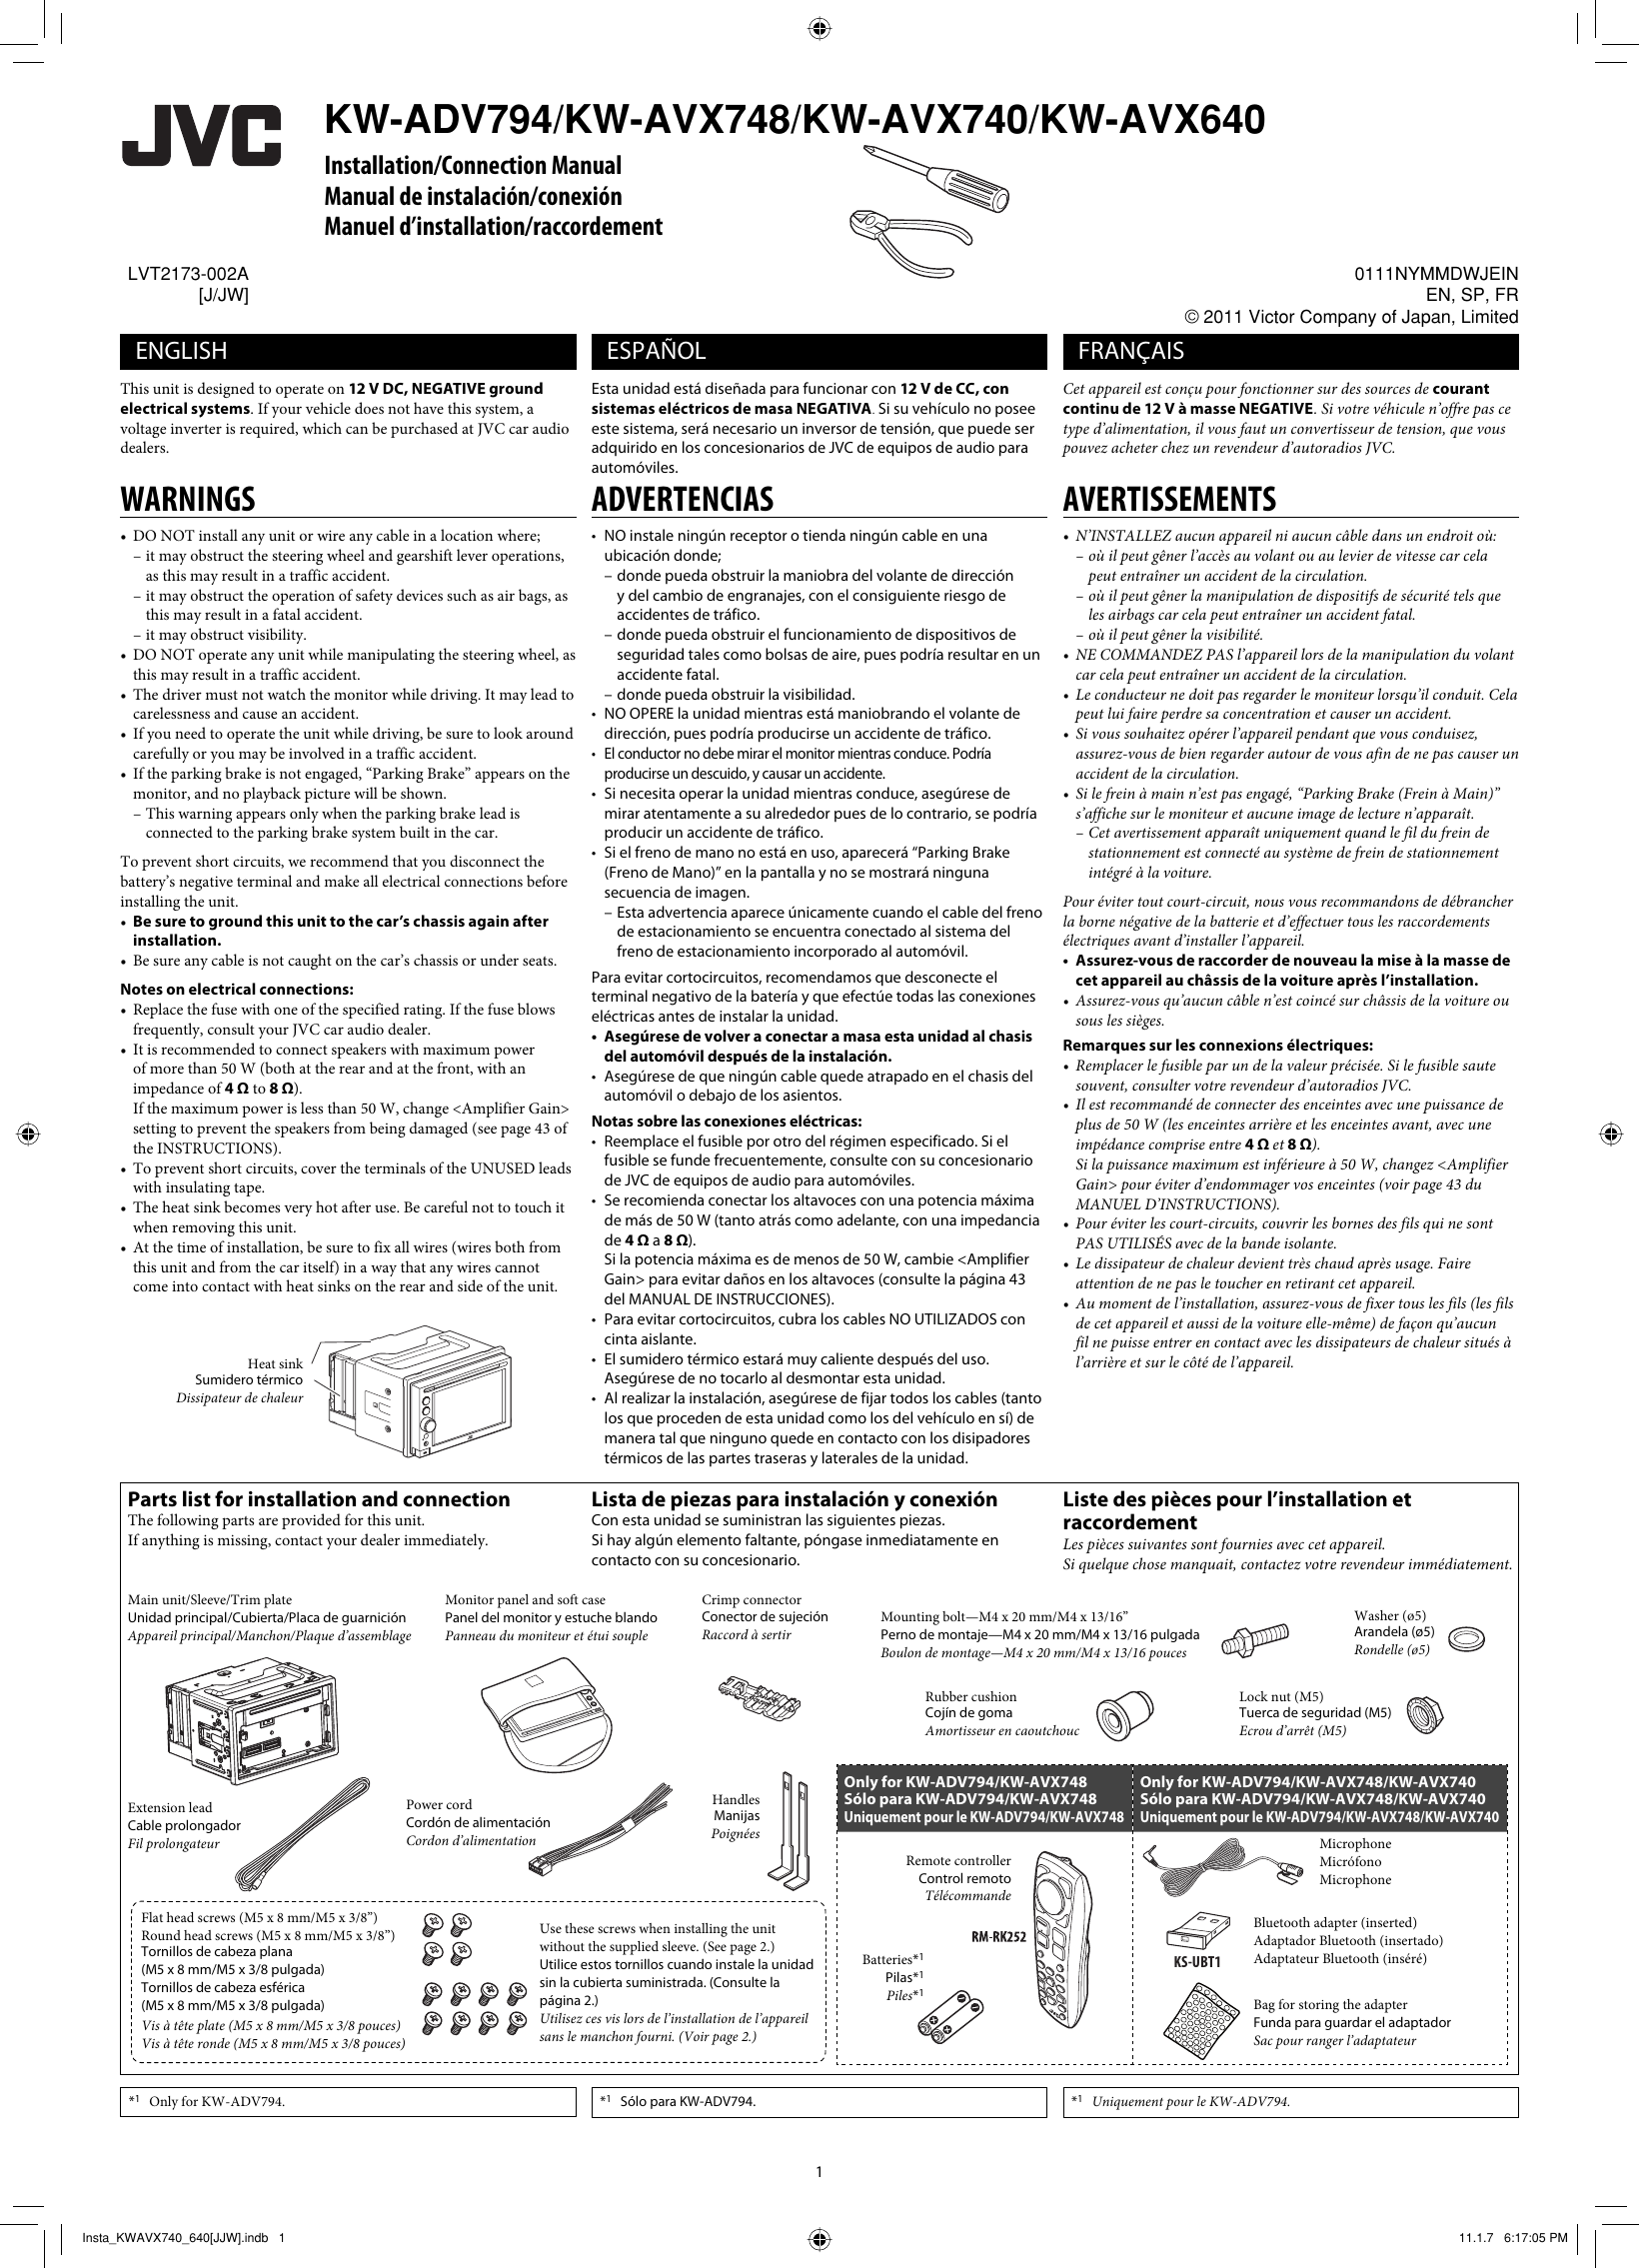 Page 1 of 6 - Jvc Jvc-Kw-Adv794-Installation-Manual- KW-ADV794/KW-AVX748/KW-AVX740/KW-AVX640 [J/JW]  Jvc-kw-adv794-installation-manual